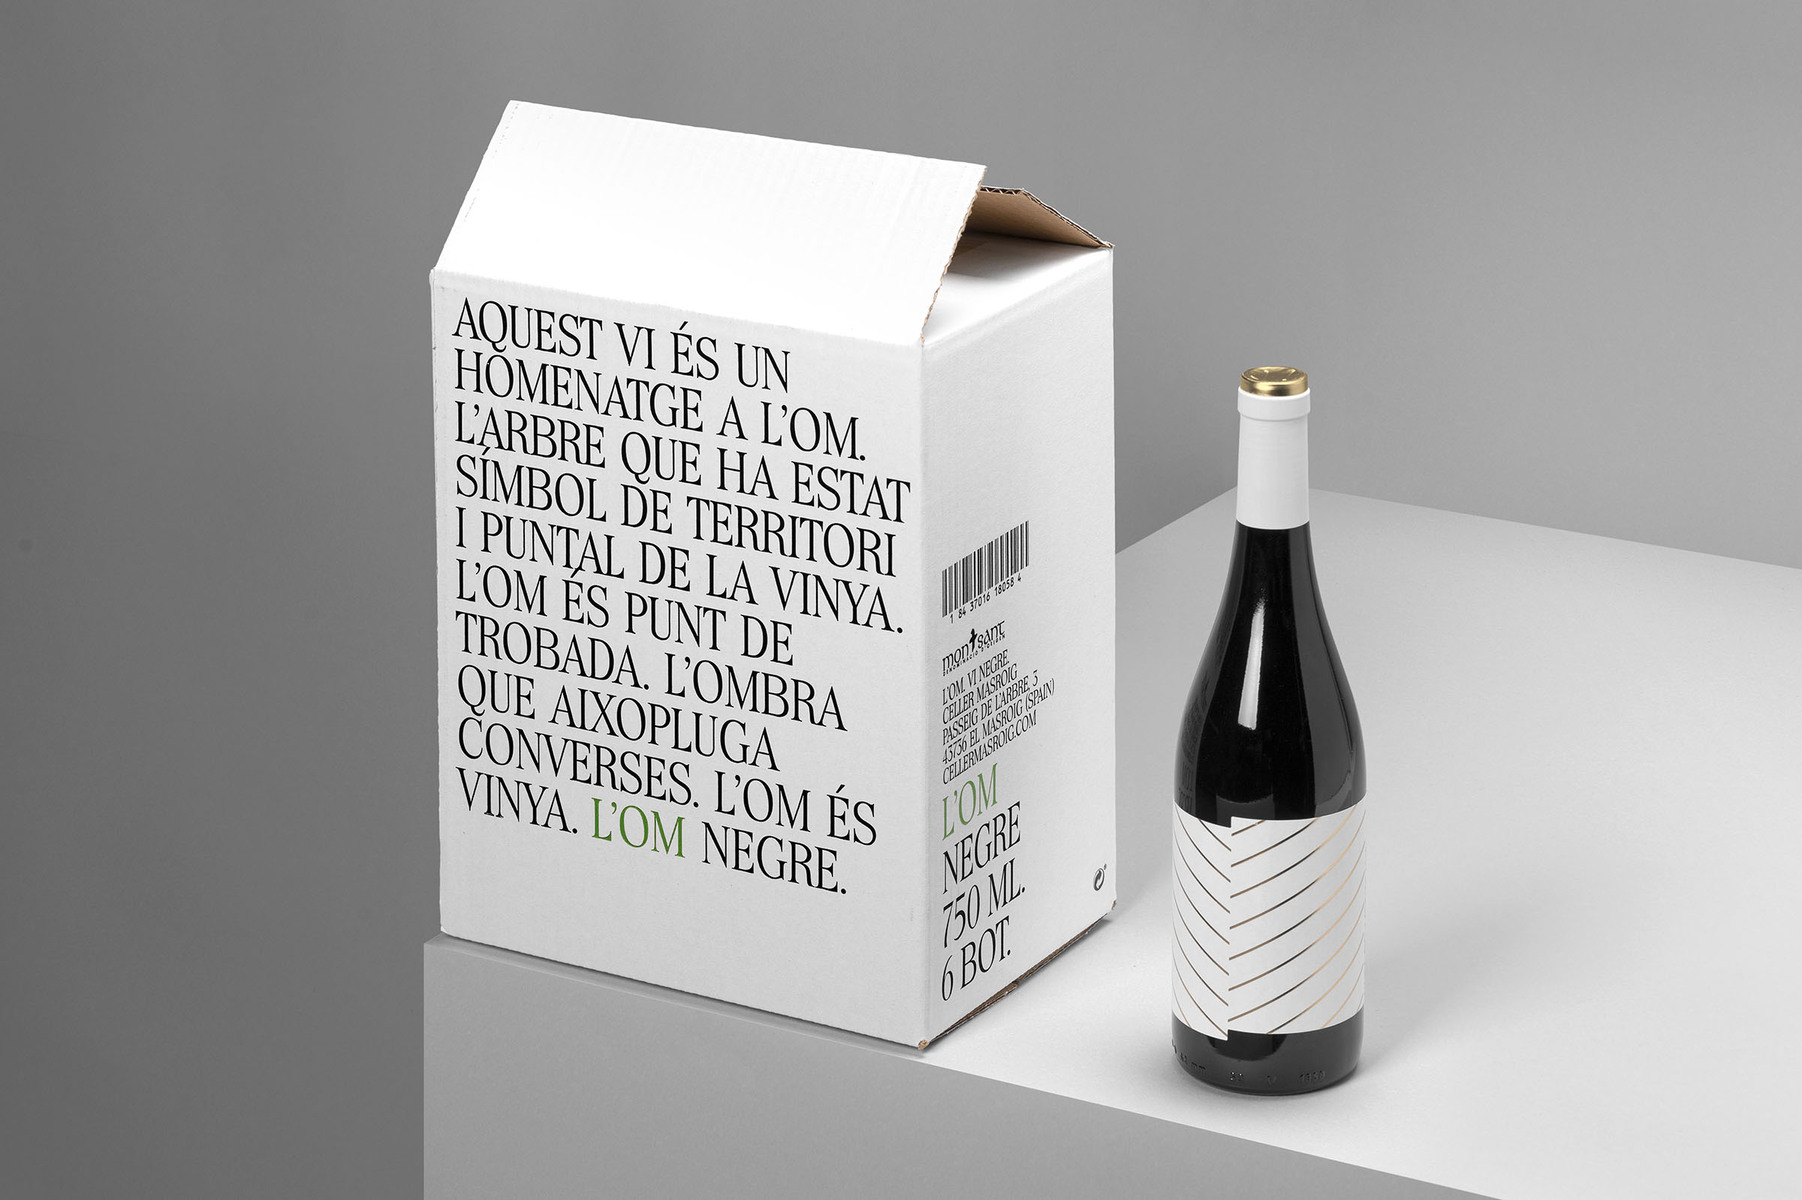 Redesign for l’Om wine